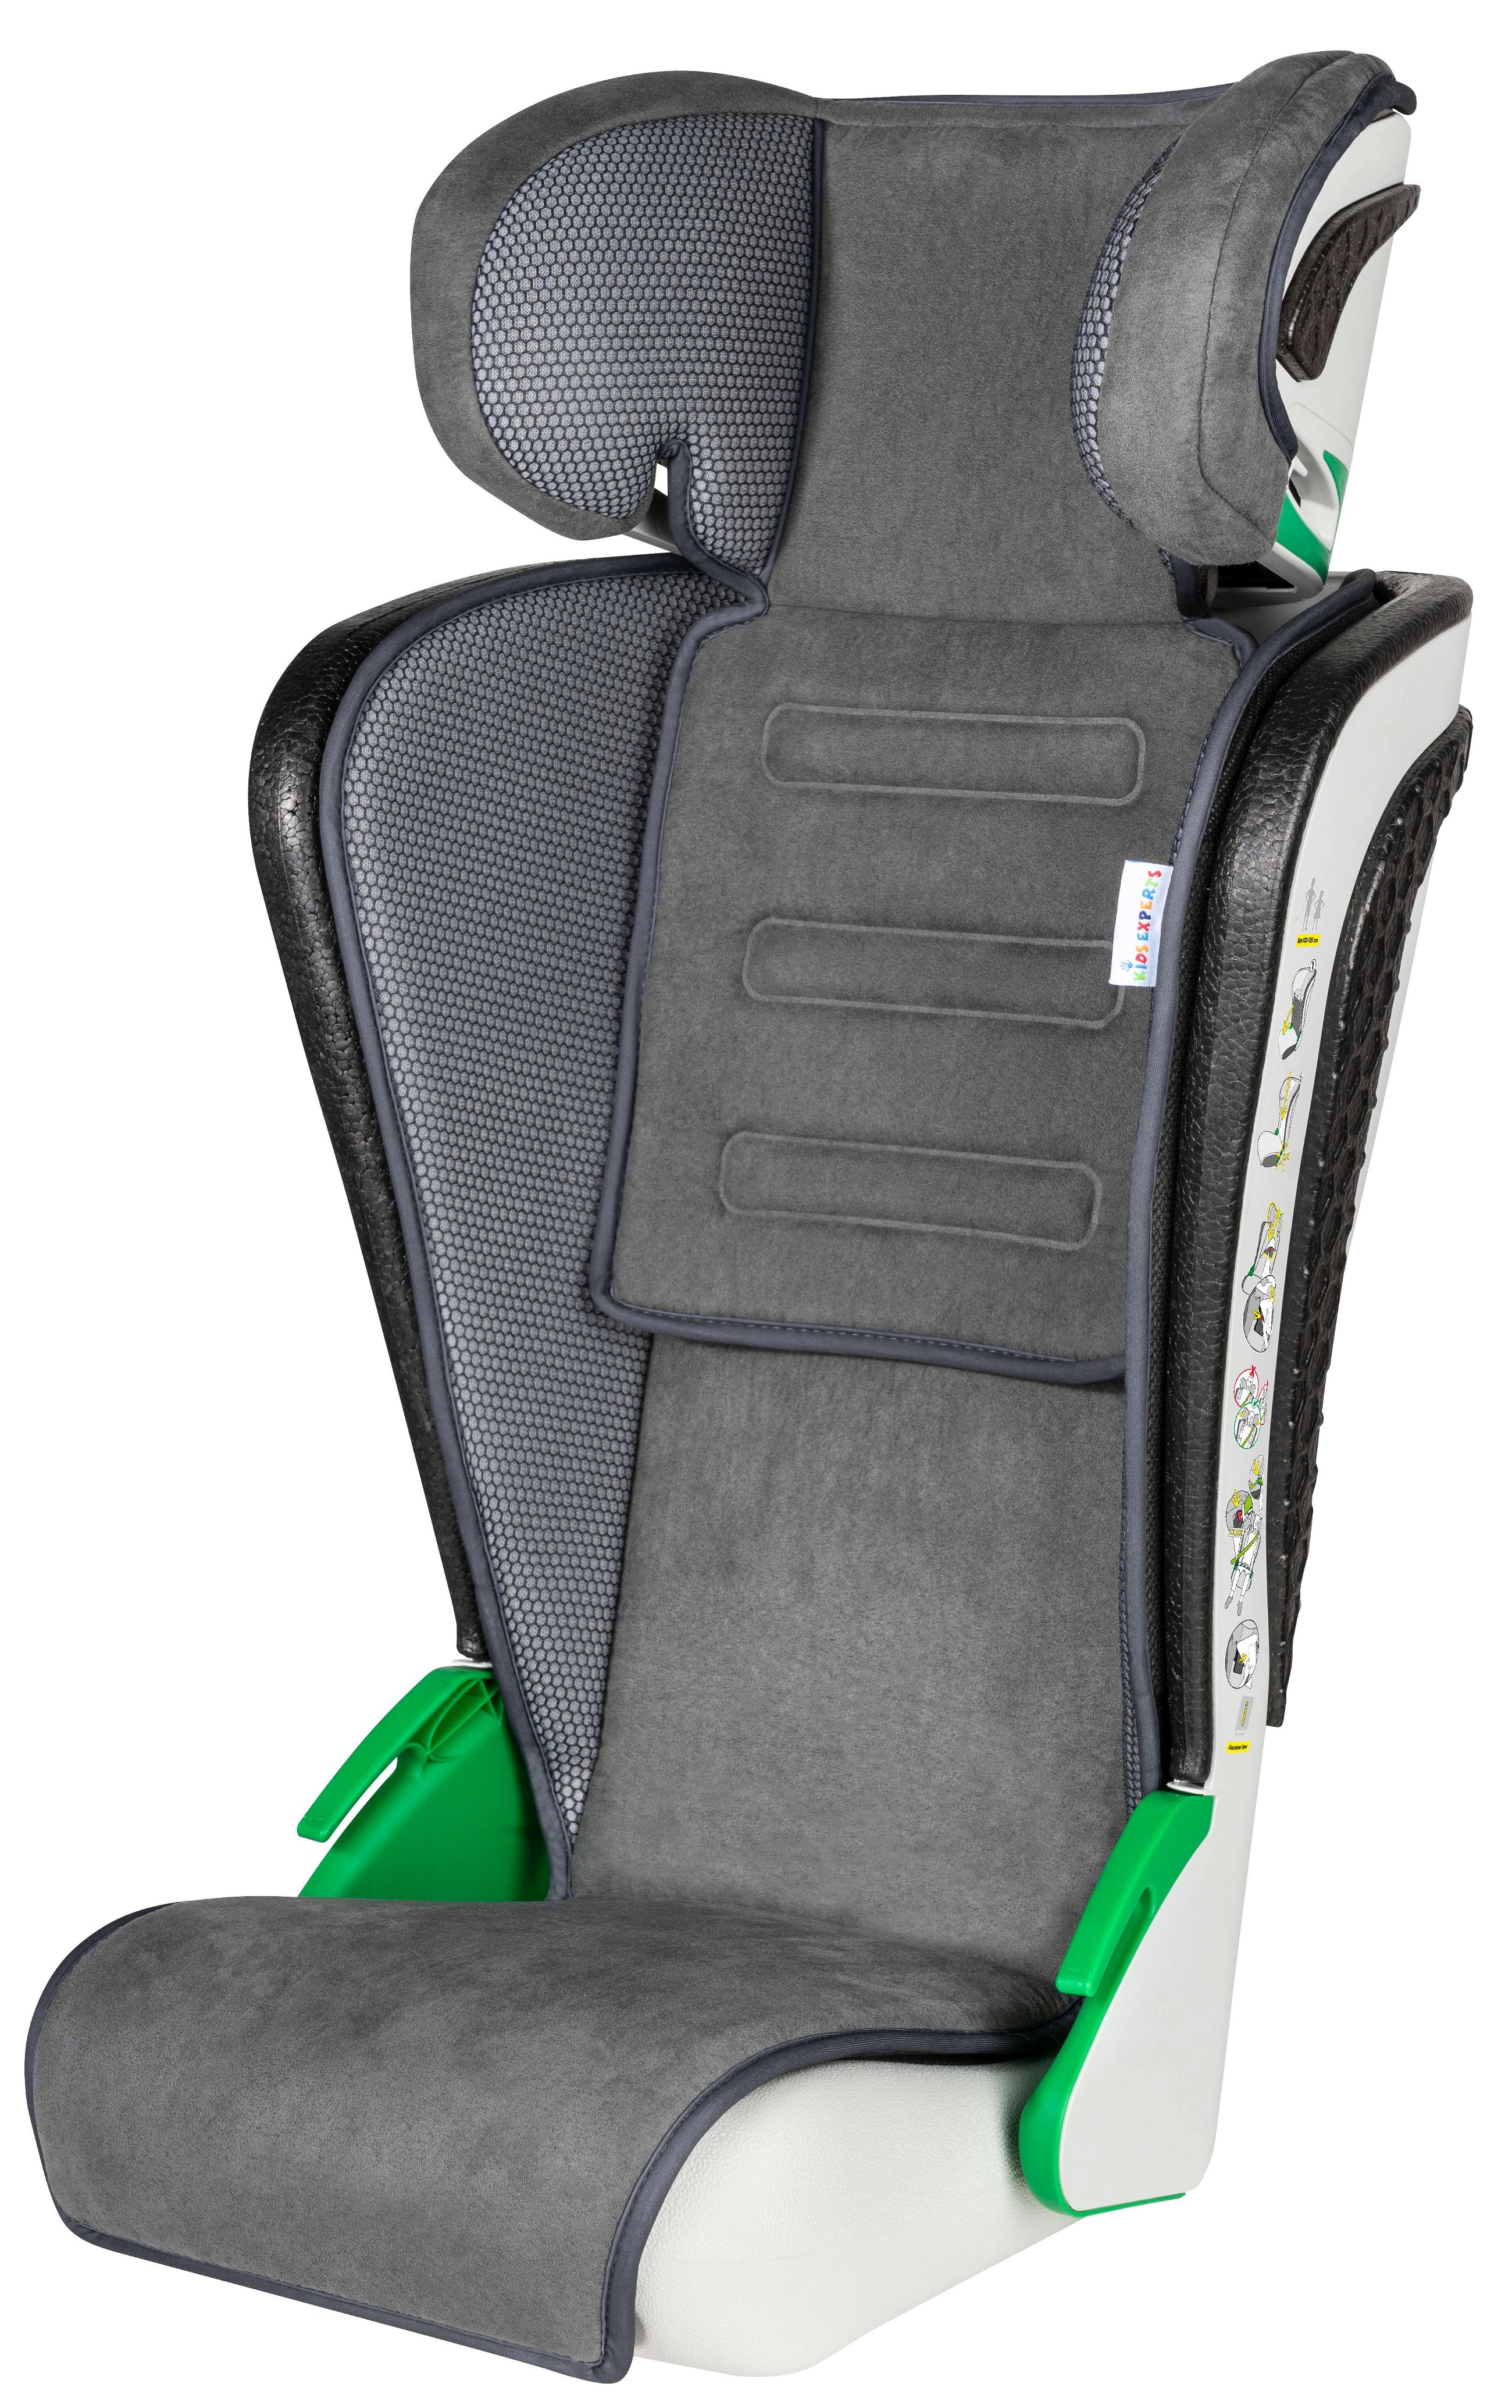 Kindersitz Noemi, klappbarer Auto-Kindersitz ECE R129 geprüft Anthrazit